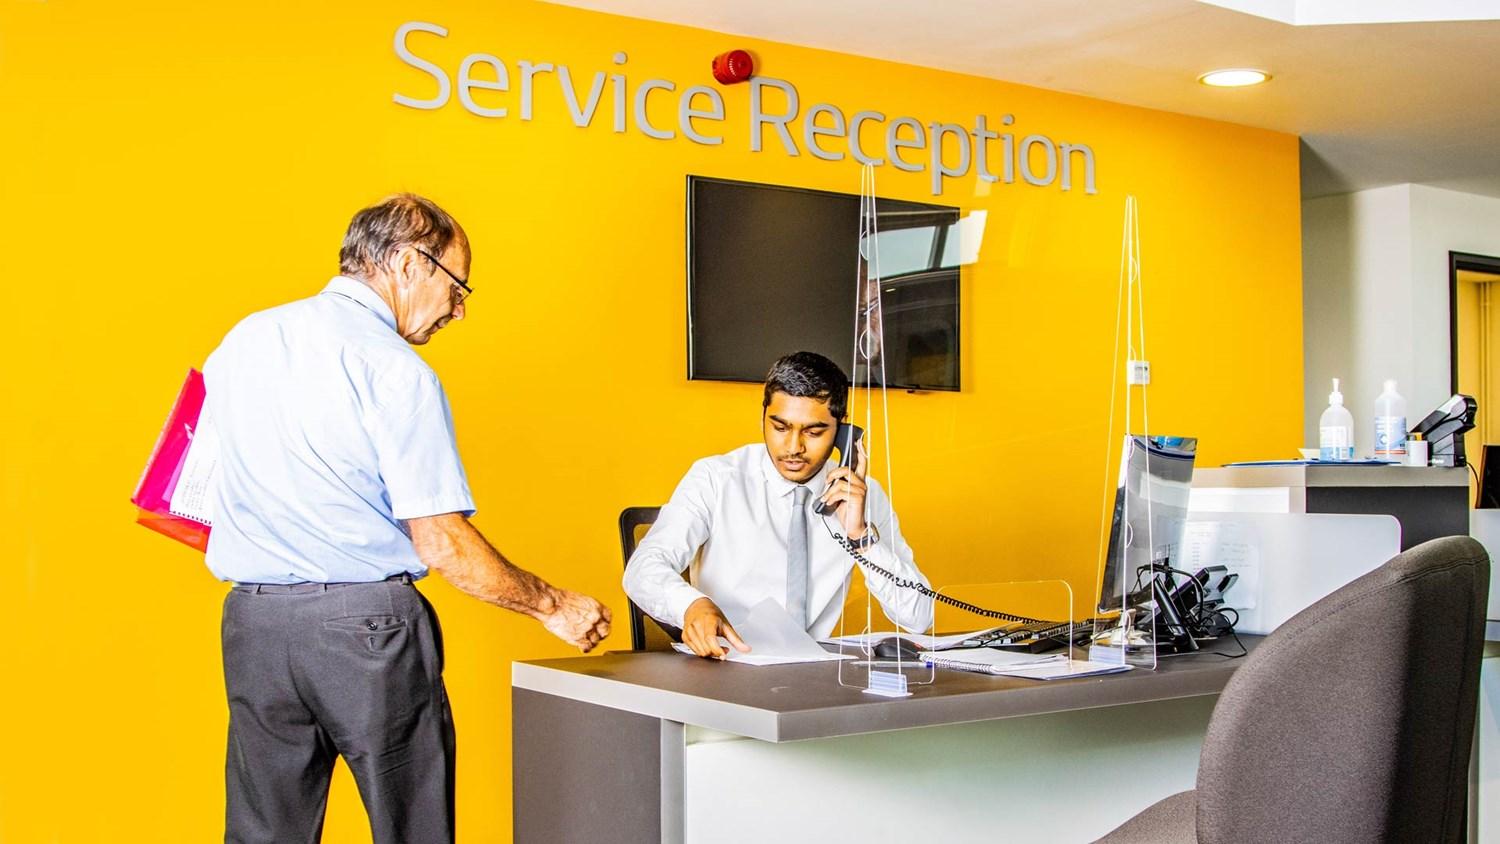 Renault Service Reception Desk